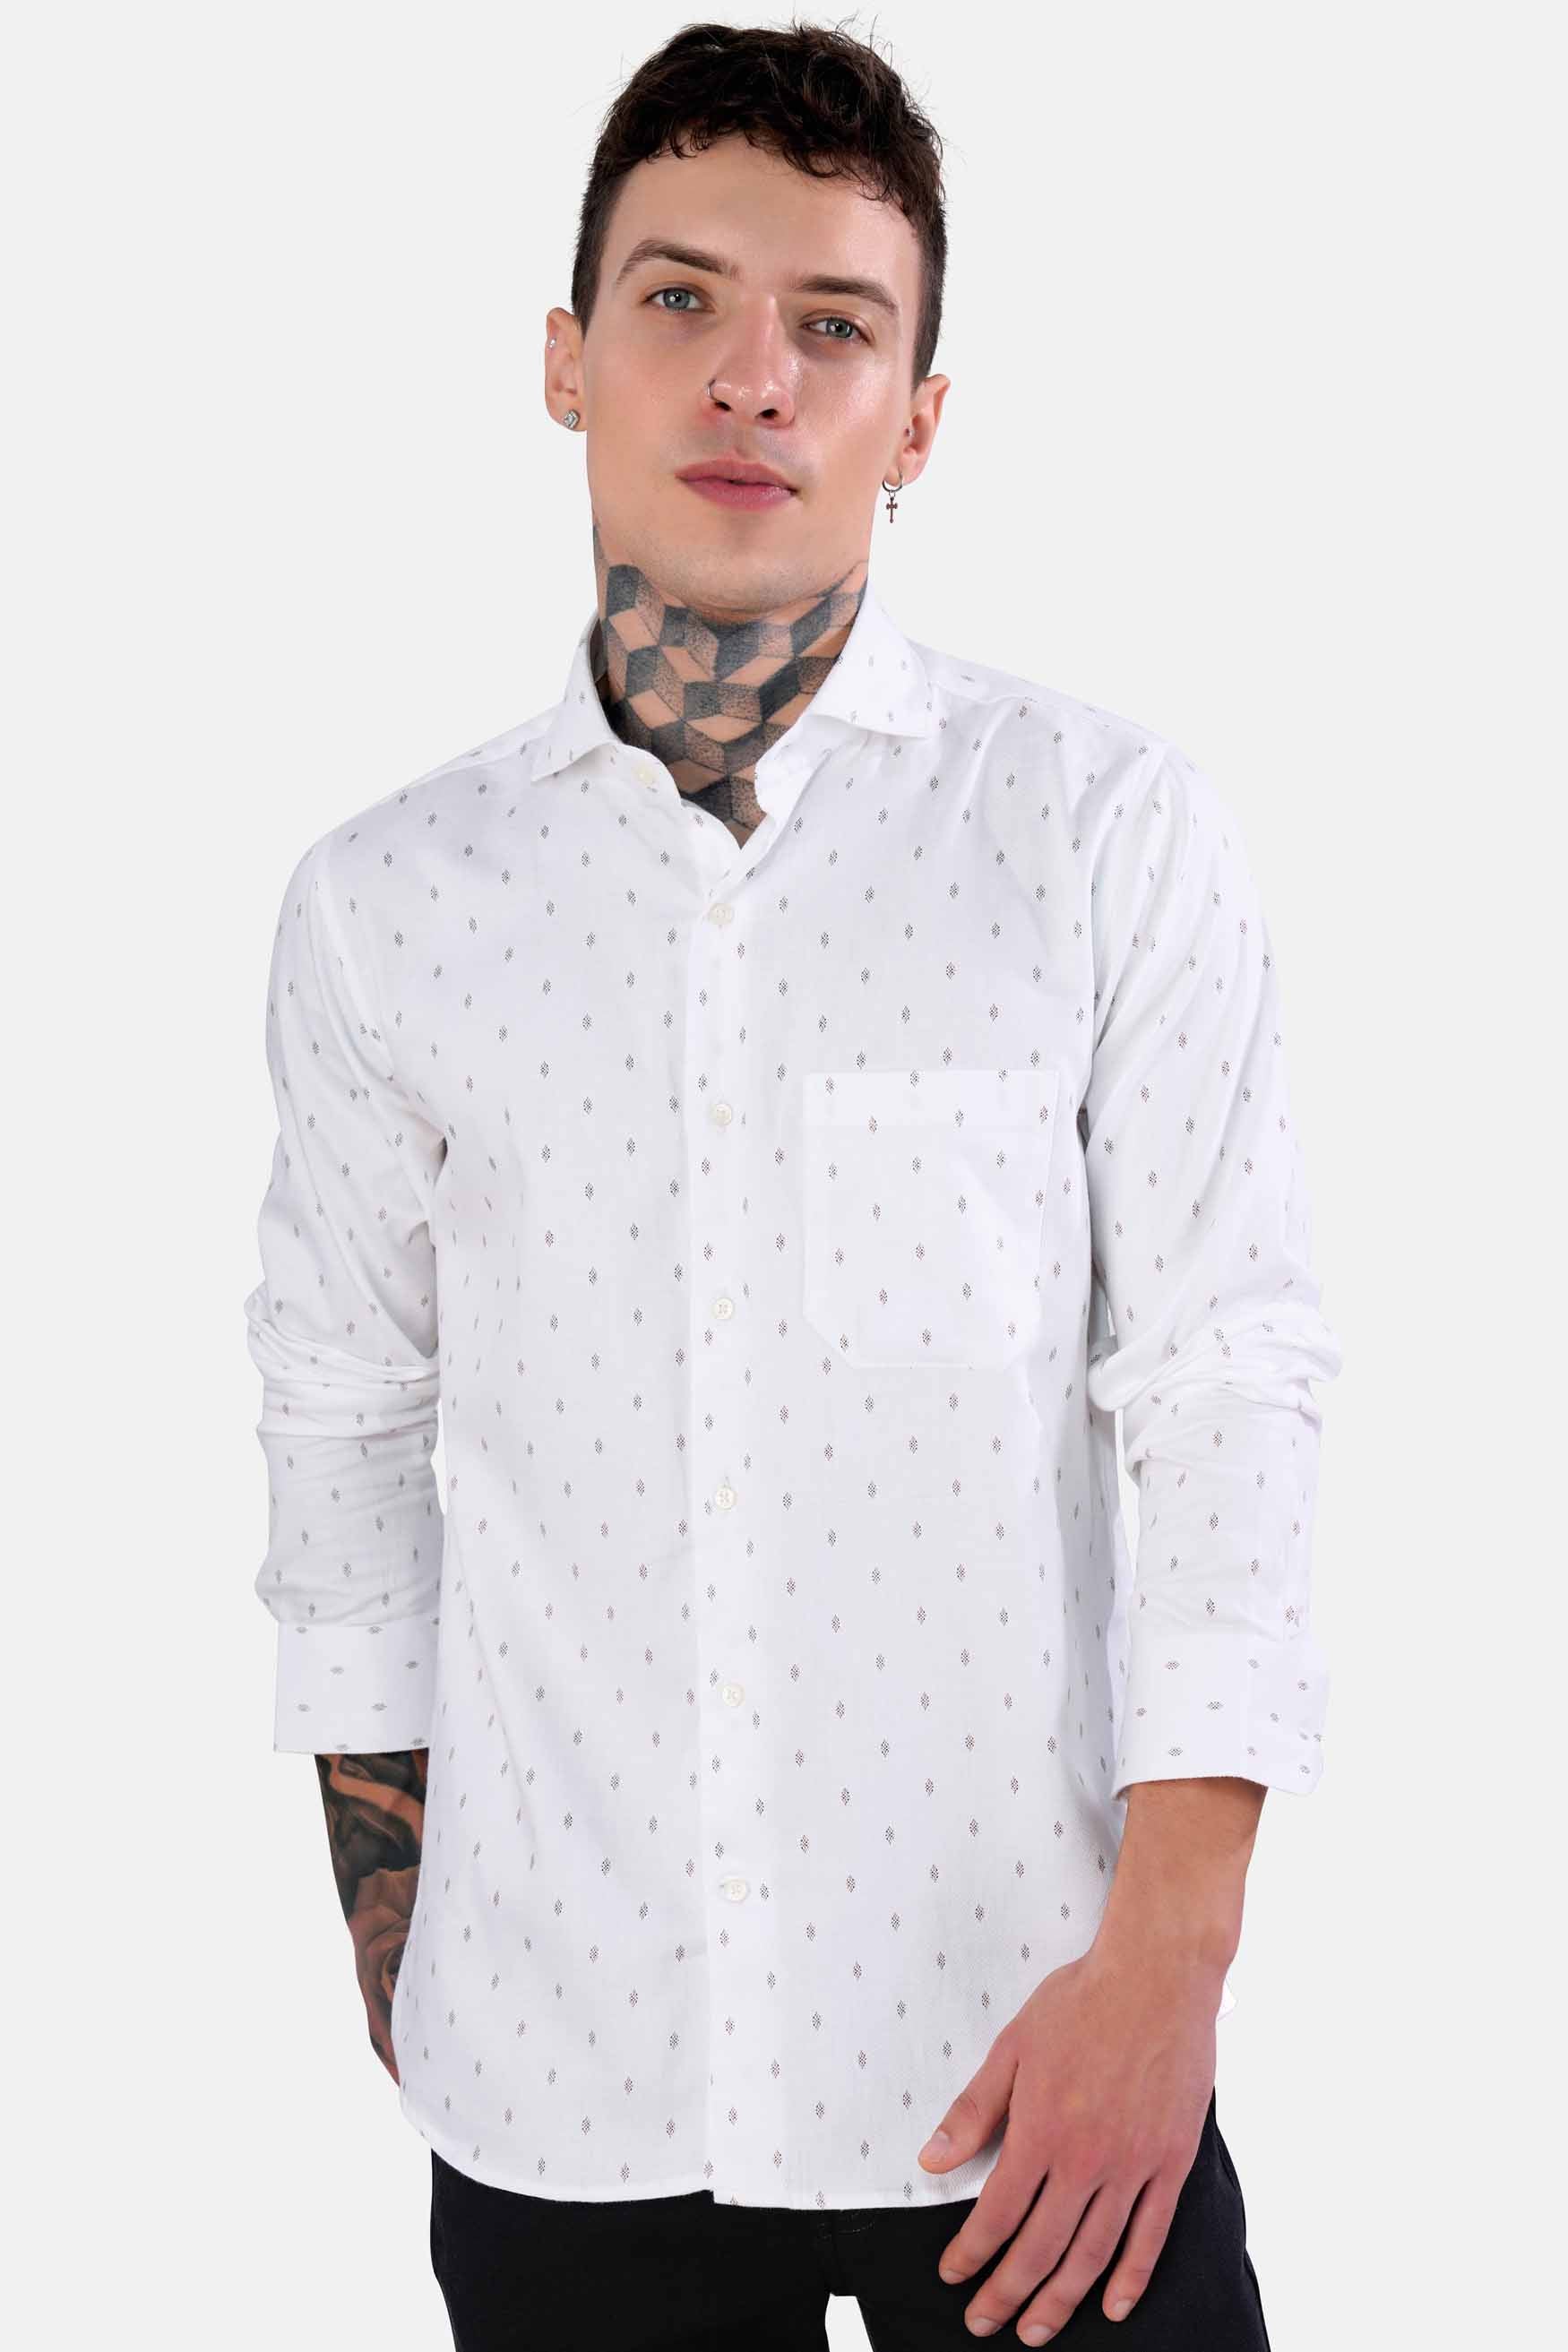 Bright White Formal/Casual Textured Premium Cotton Shirt For Men